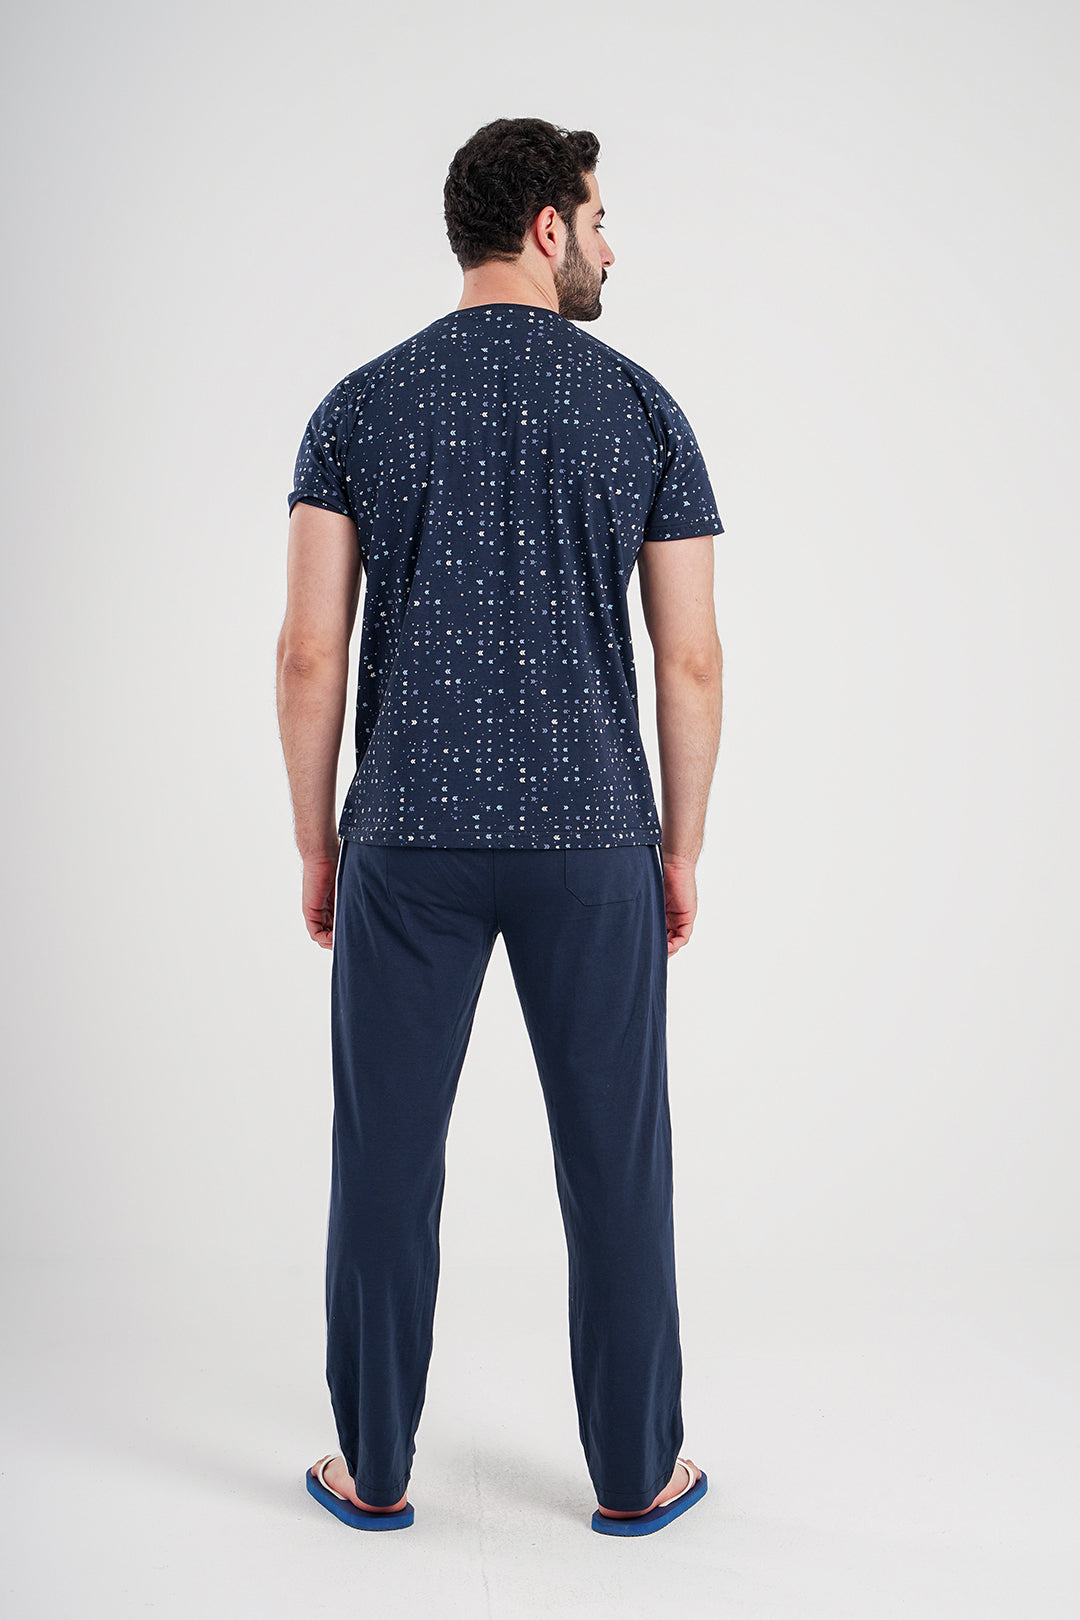 Men's pajamas printed T-shirt * solid pants